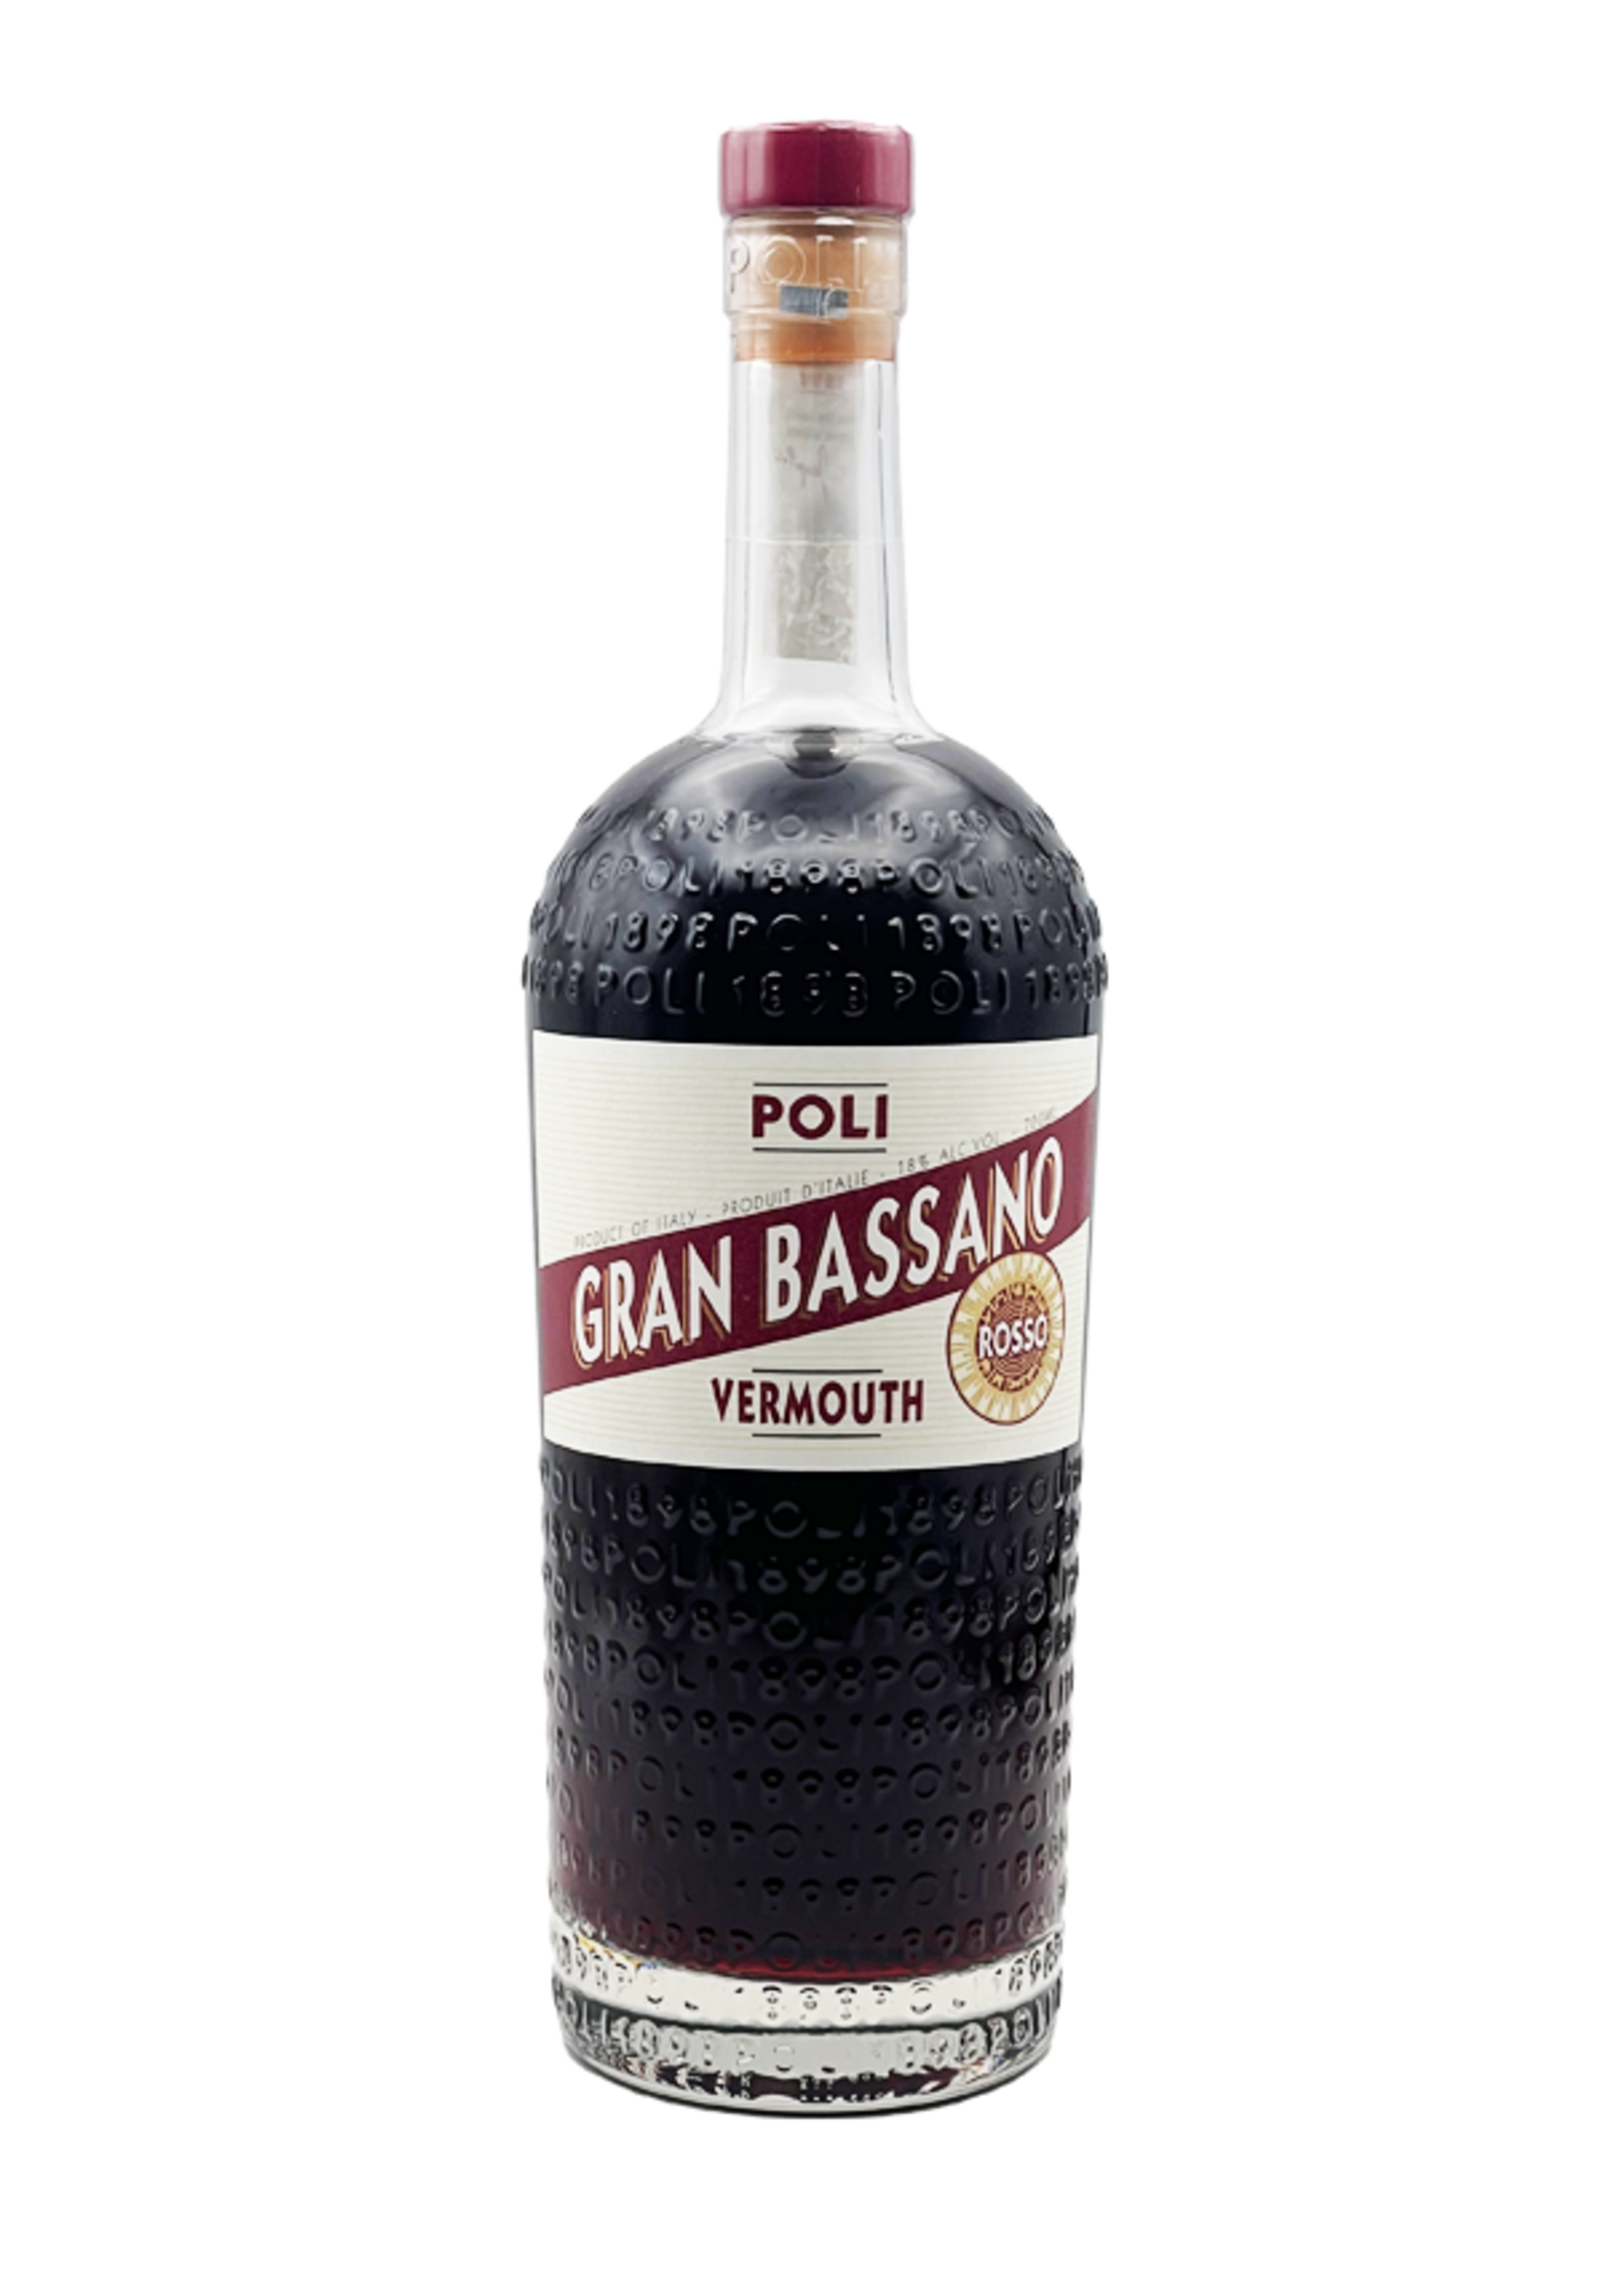 Poli Vermouth Rosso "Gran Bassano" NV Poli